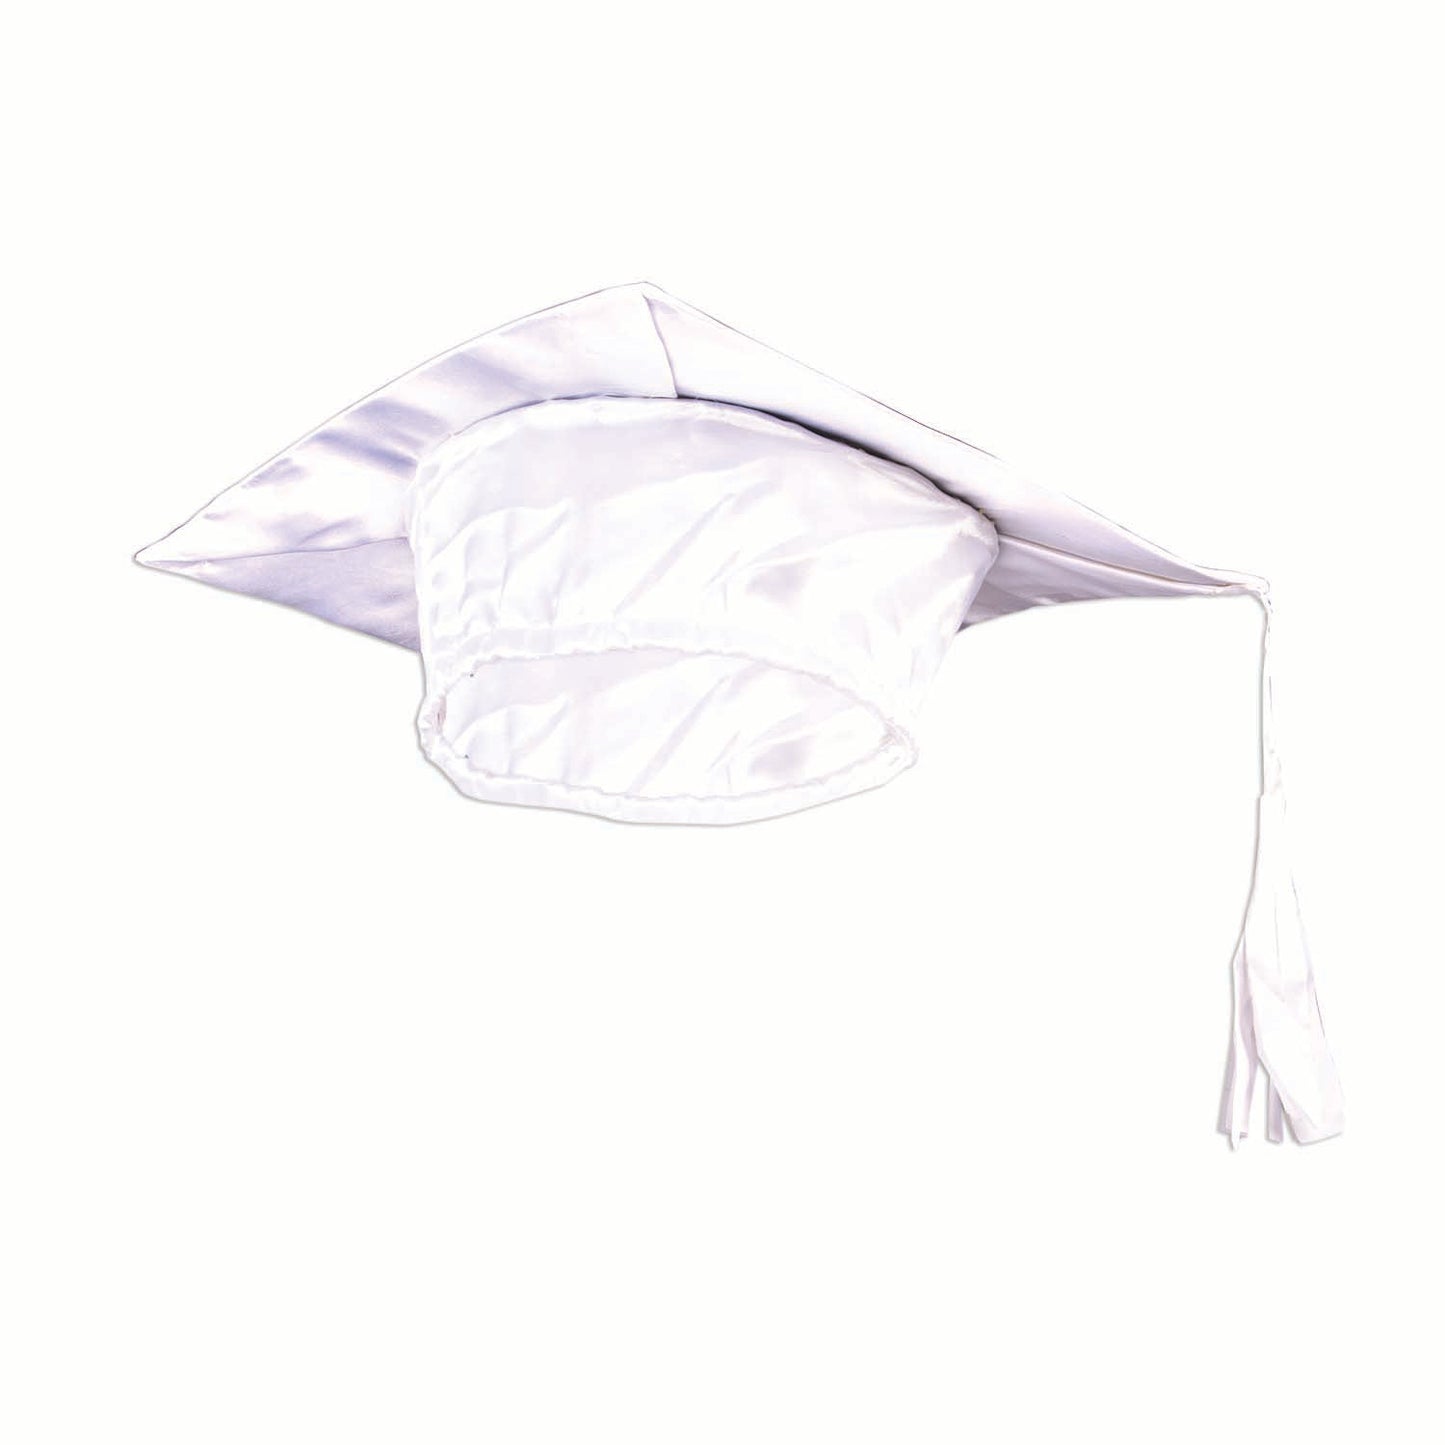 Adult White Graduation Cap